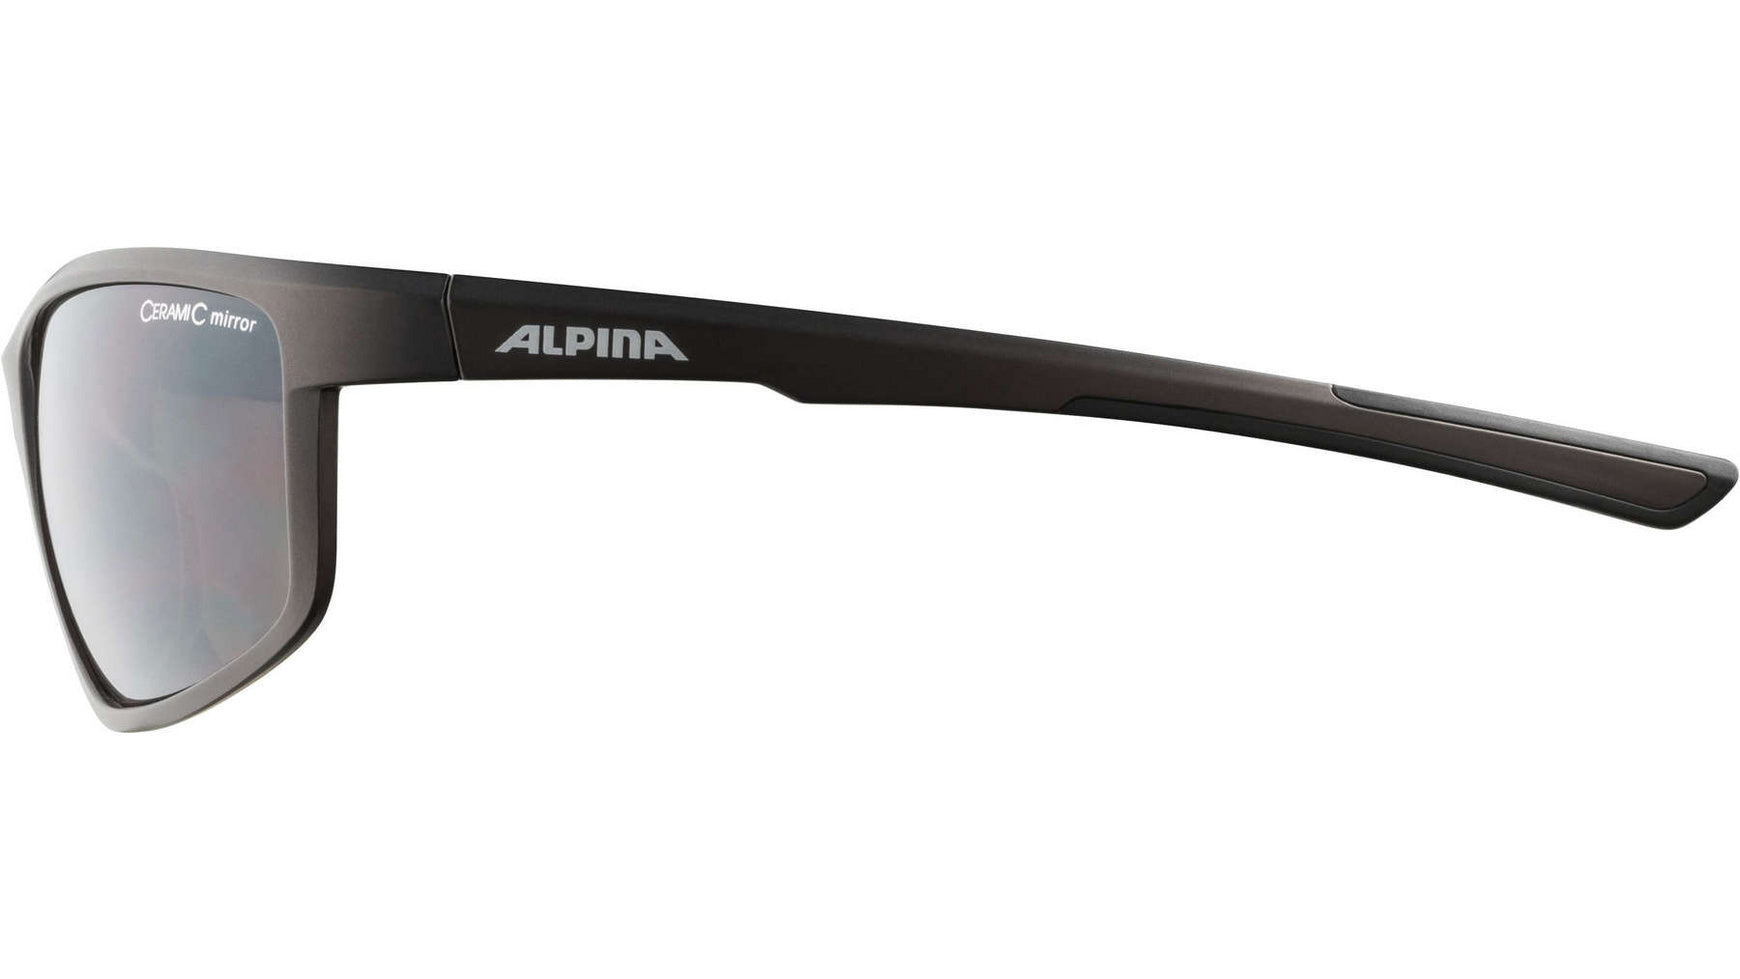 Alpina Defey Fahrradbrille image 1